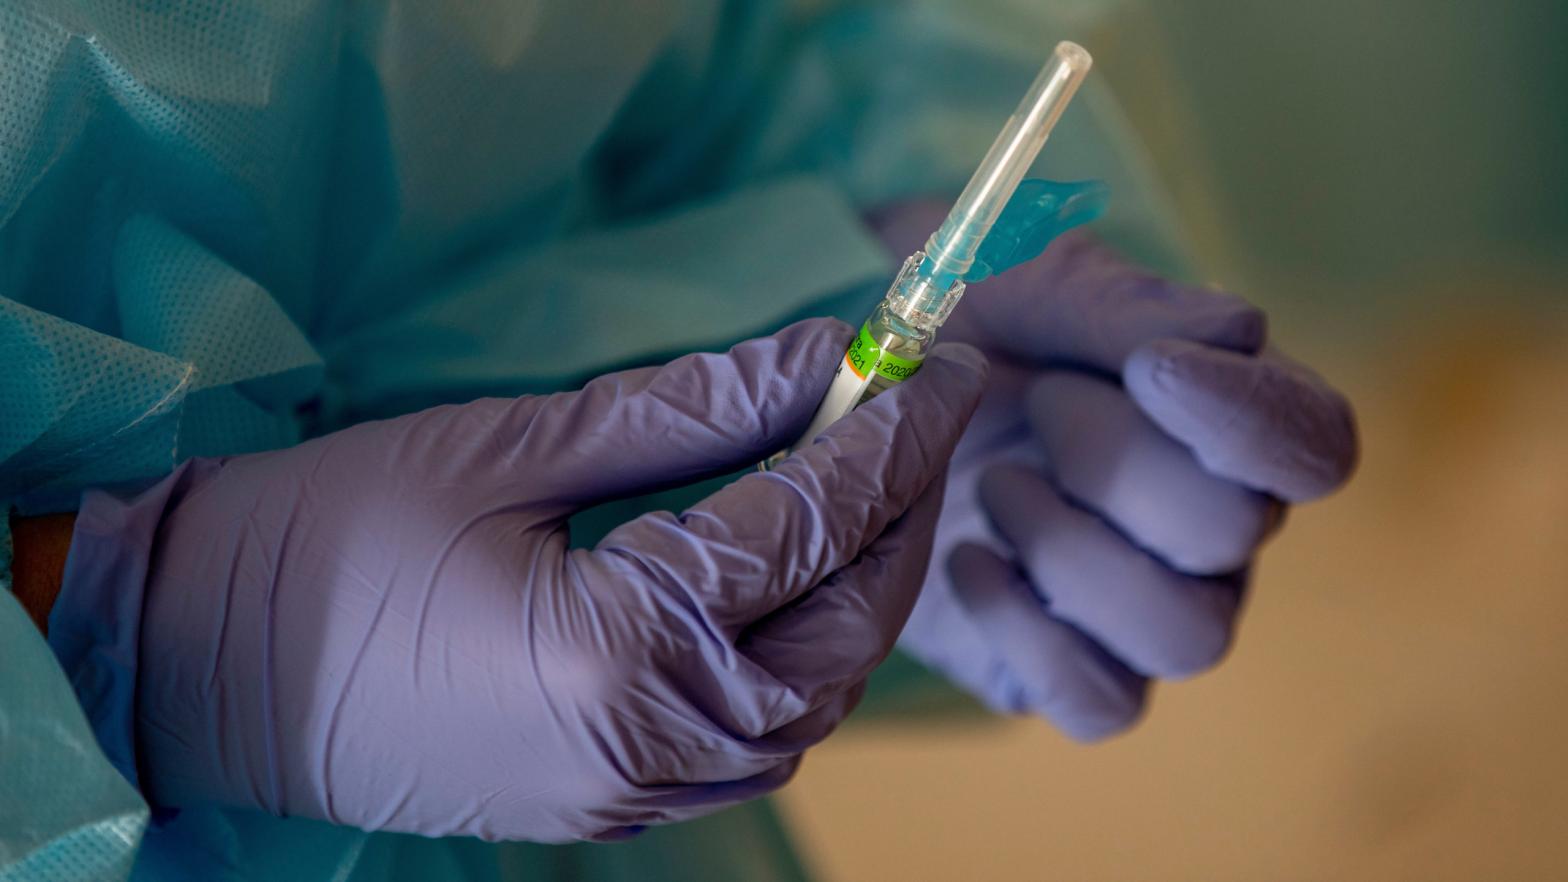 A flu vaccine being prepared in Las Rozas, Spain on Oct. 14, 2020. (Photo: Pablo Blazquez Dominguez, Getty Images)